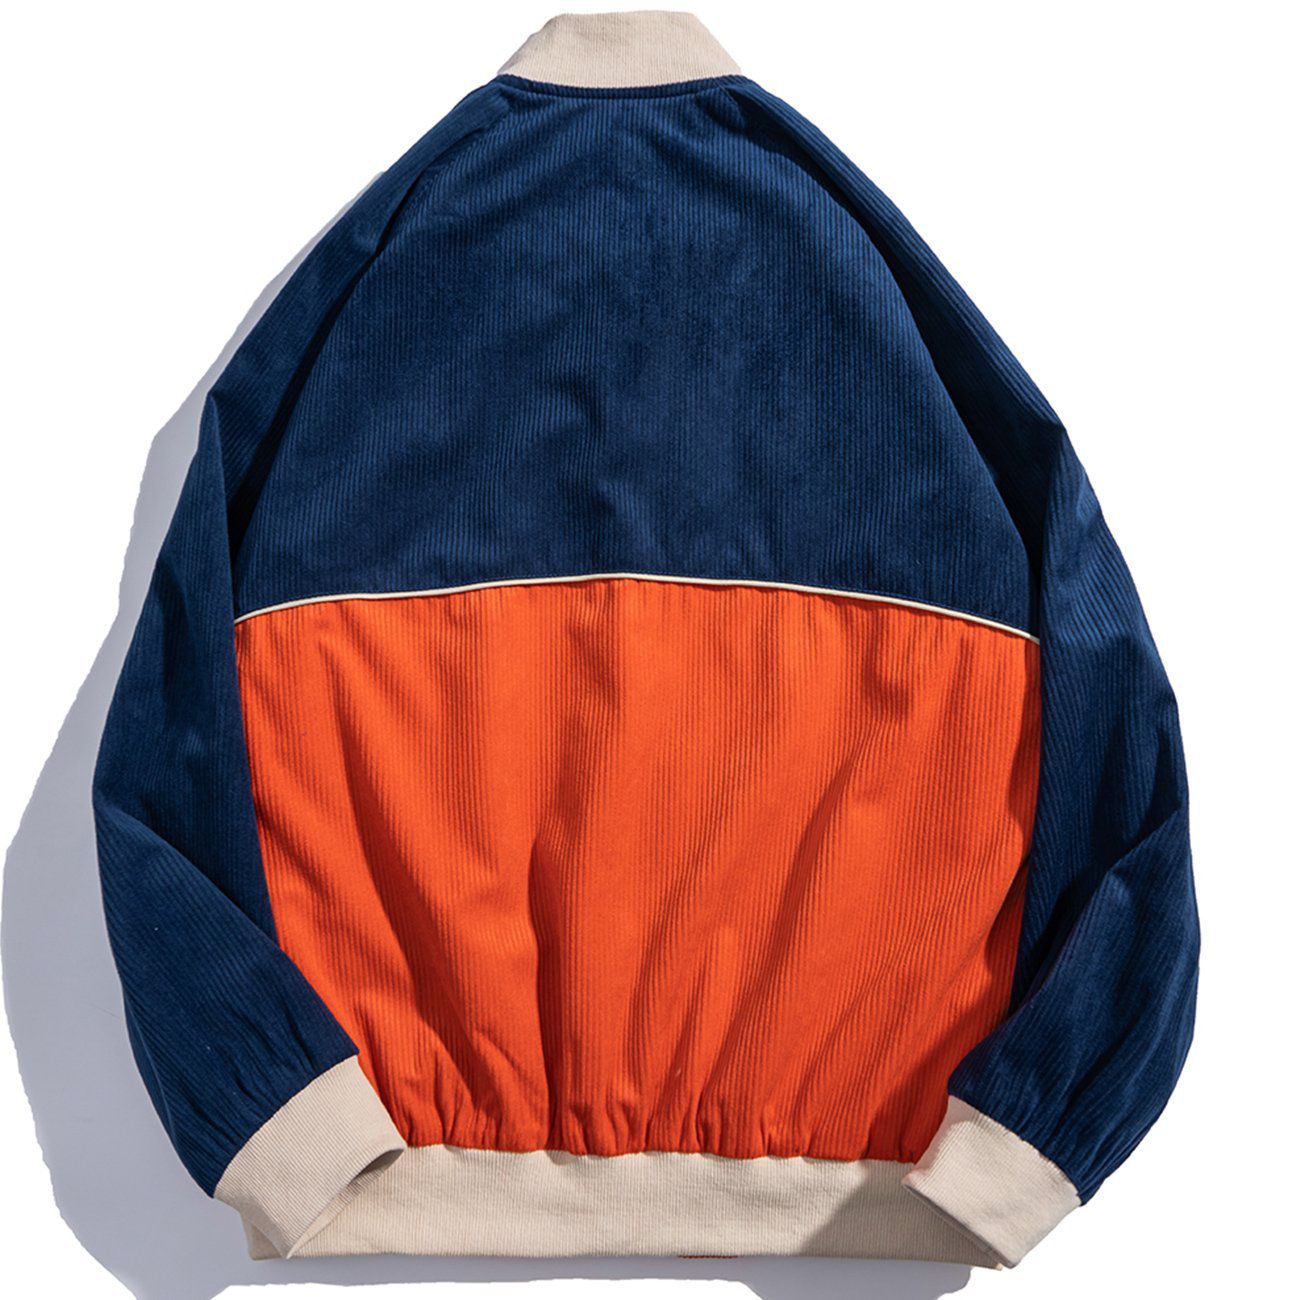 Majesda® - Vintage Color Block Patchwork Corduroy Jacket outfit ideas, streetwear fashion - majesda.com